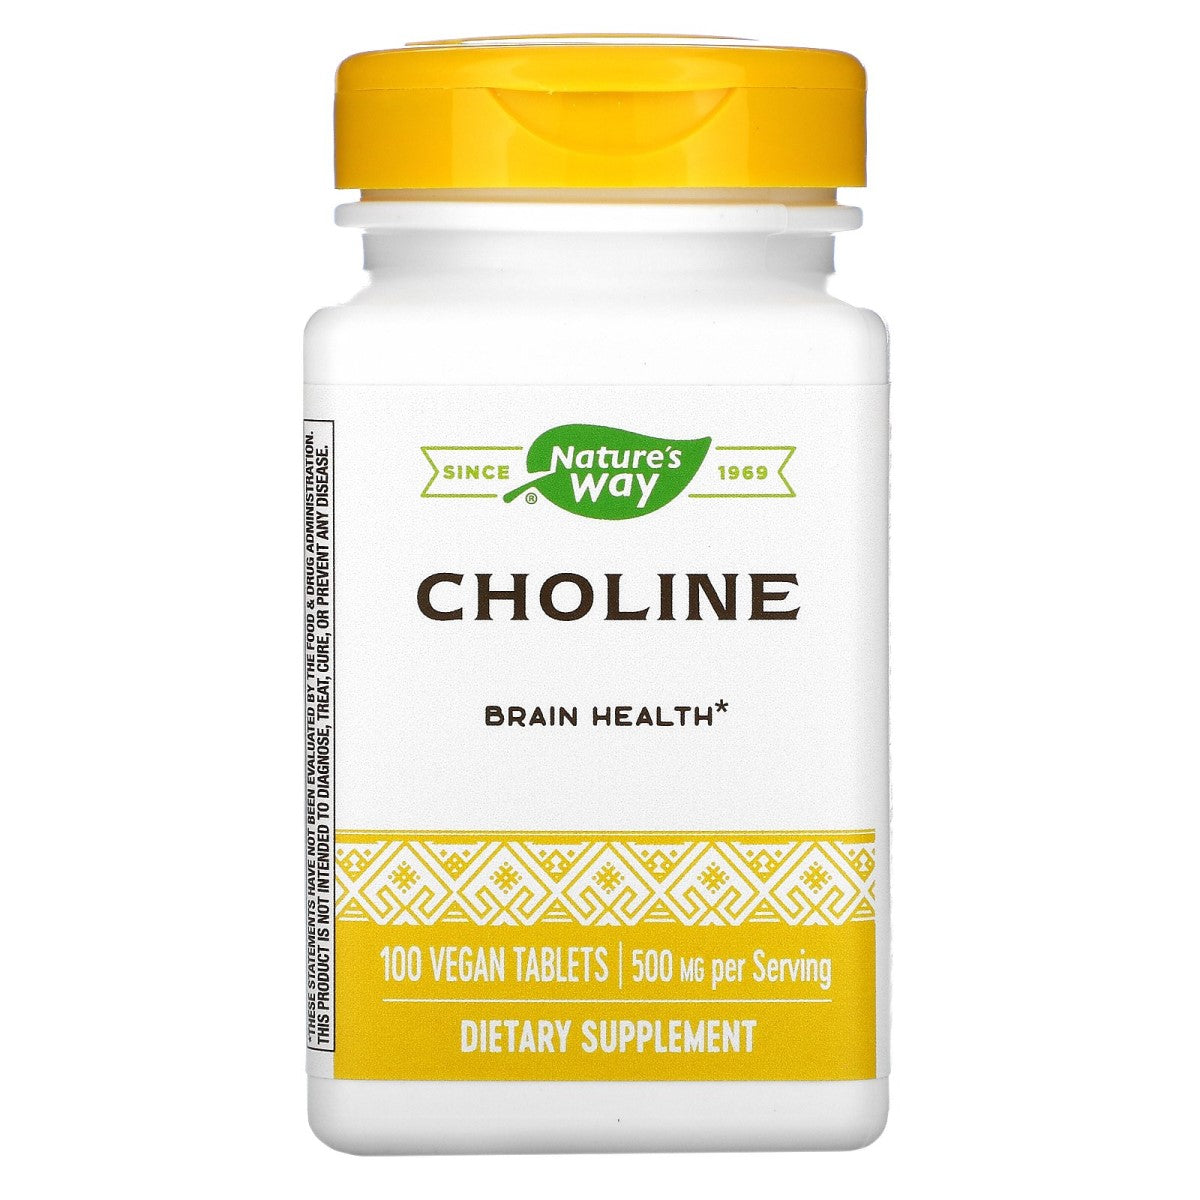 Primary image of Choline